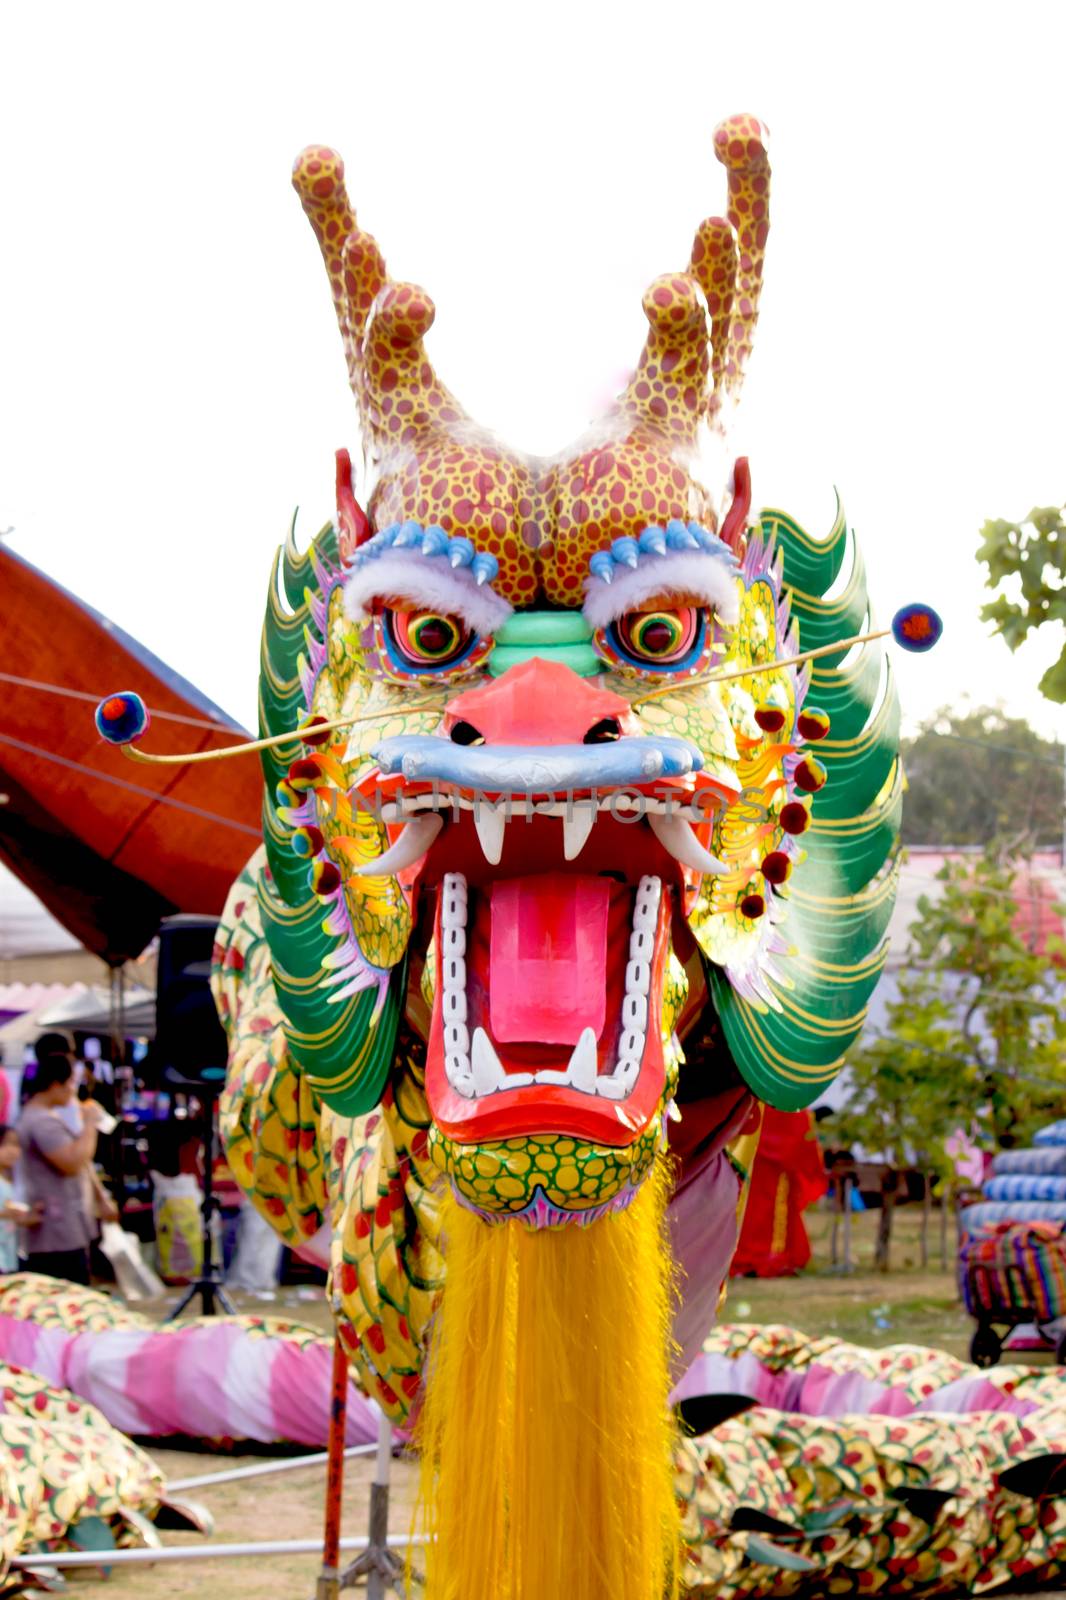 Puppet dragon For faith-based celebrations